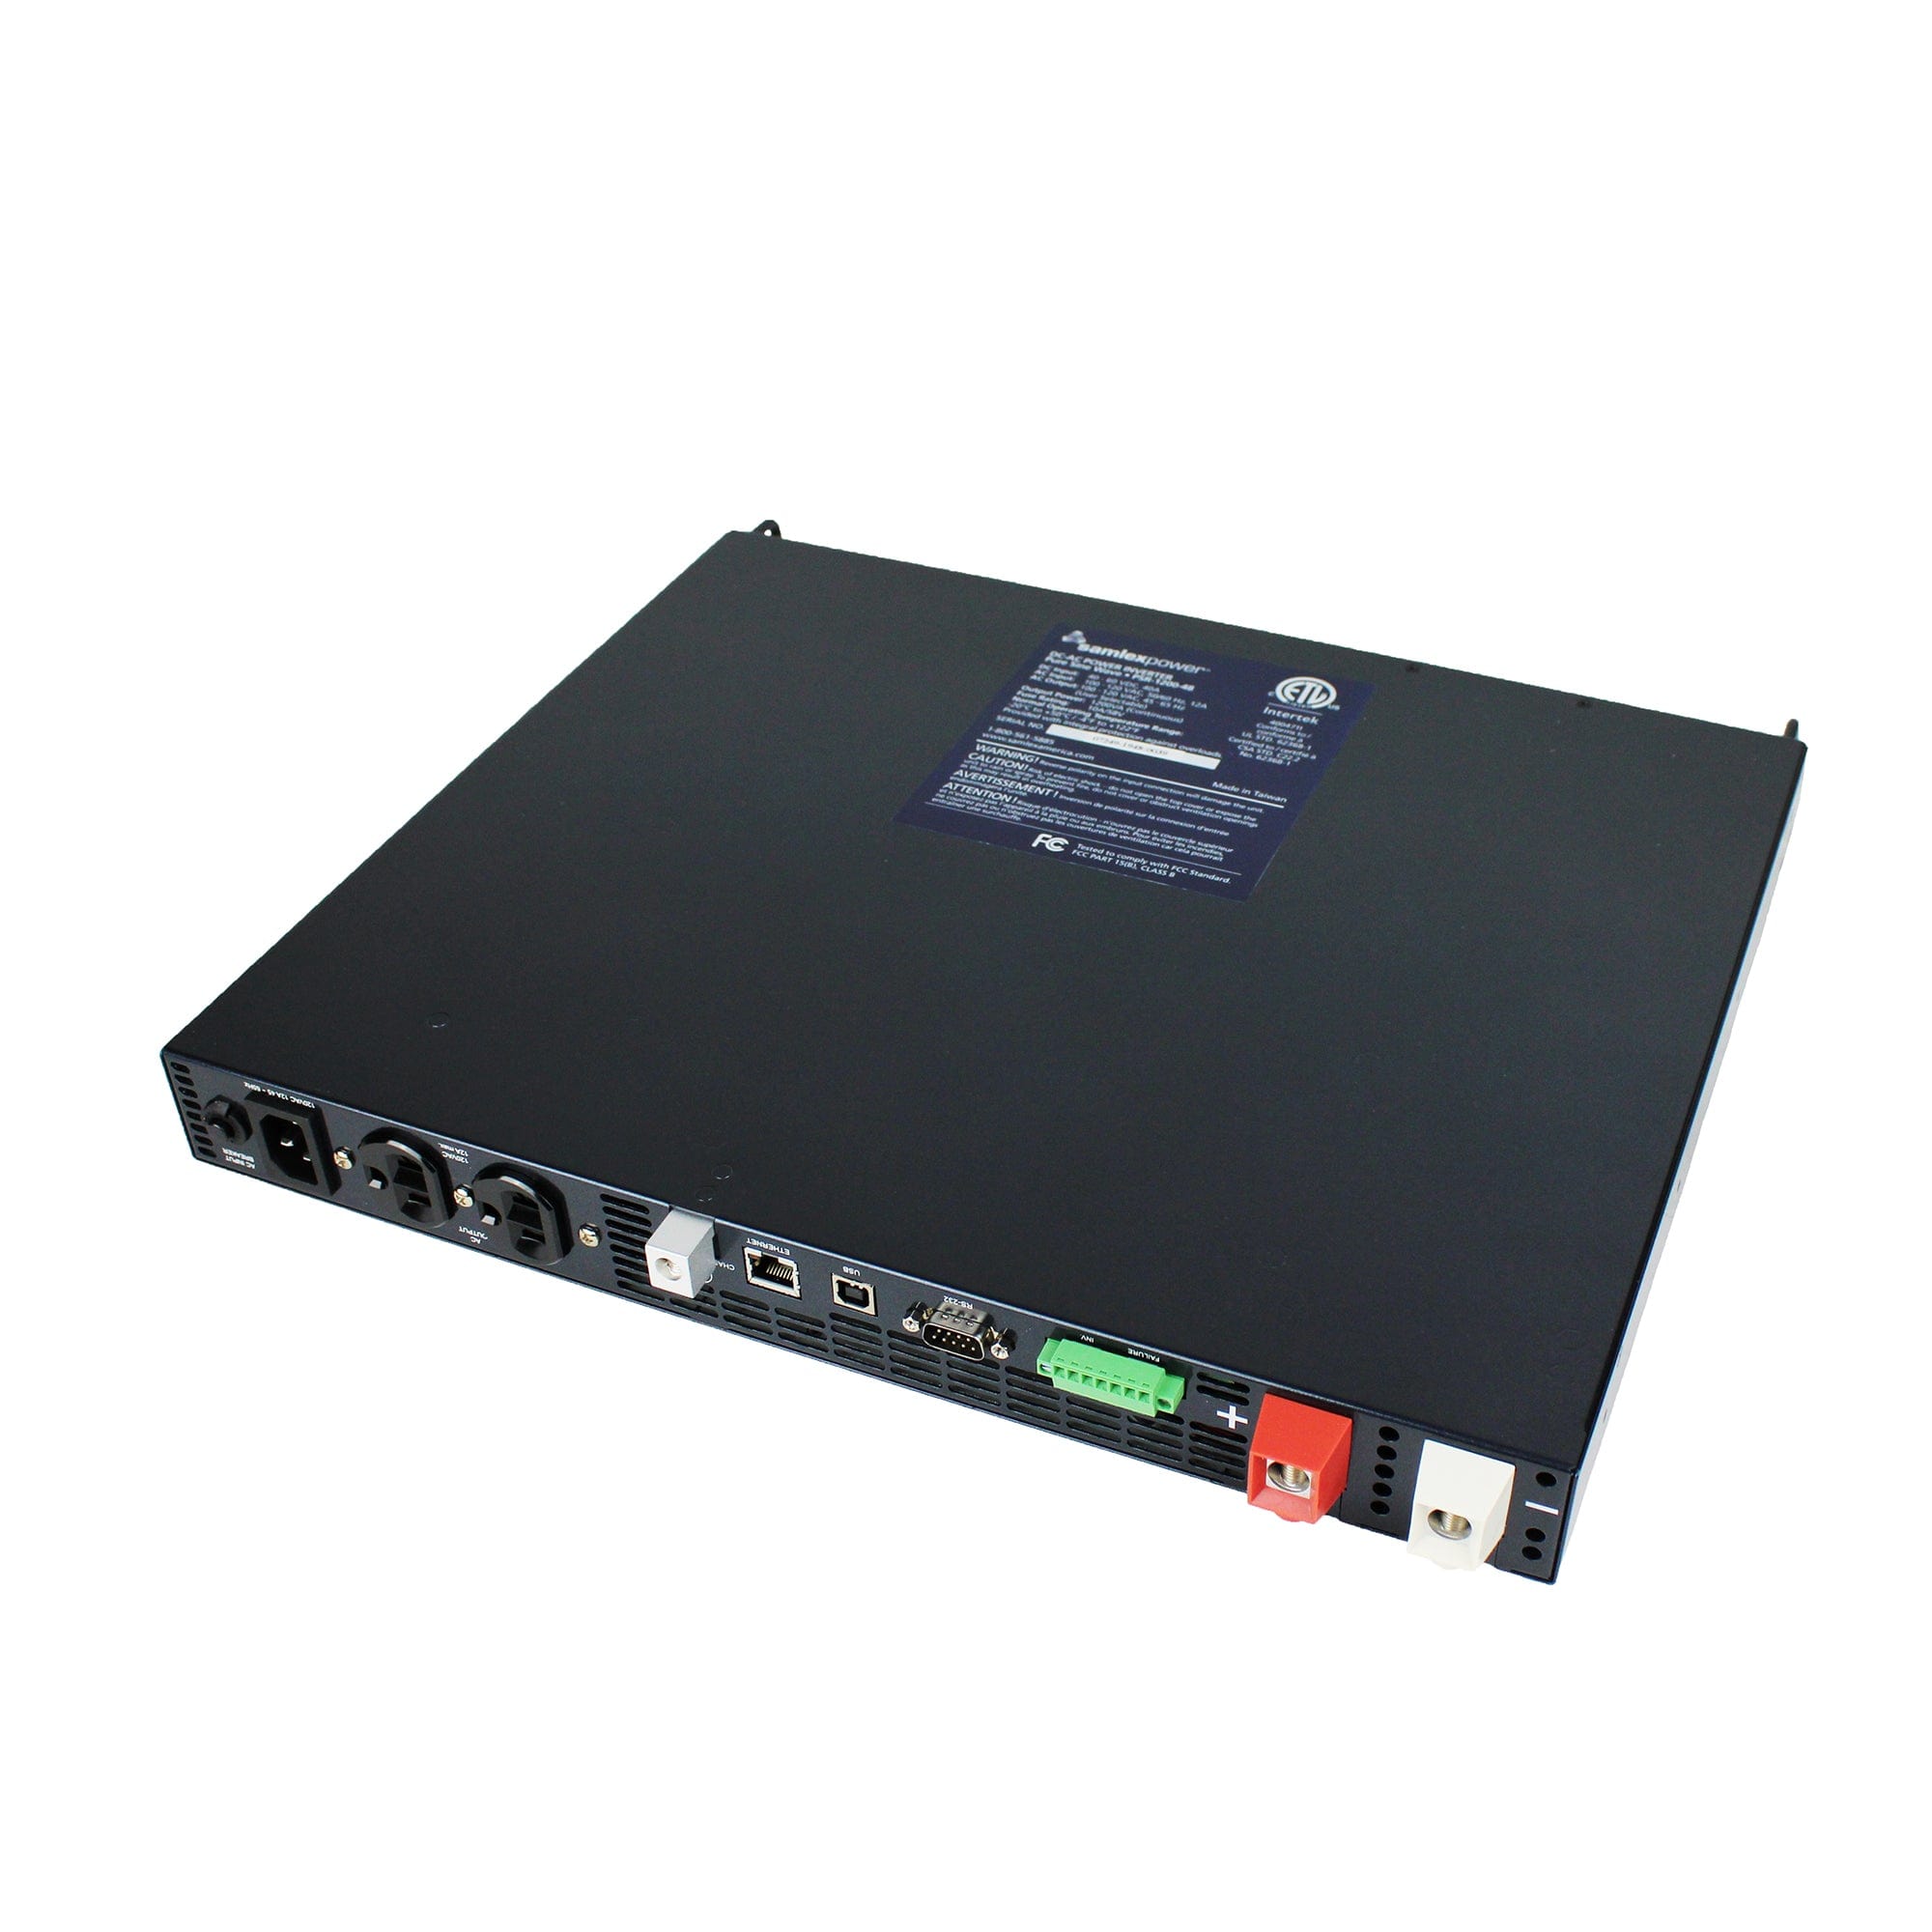 Samlex PSR-1200-48 1200 Watt DC-AC Power Inverters with Transfer Relay